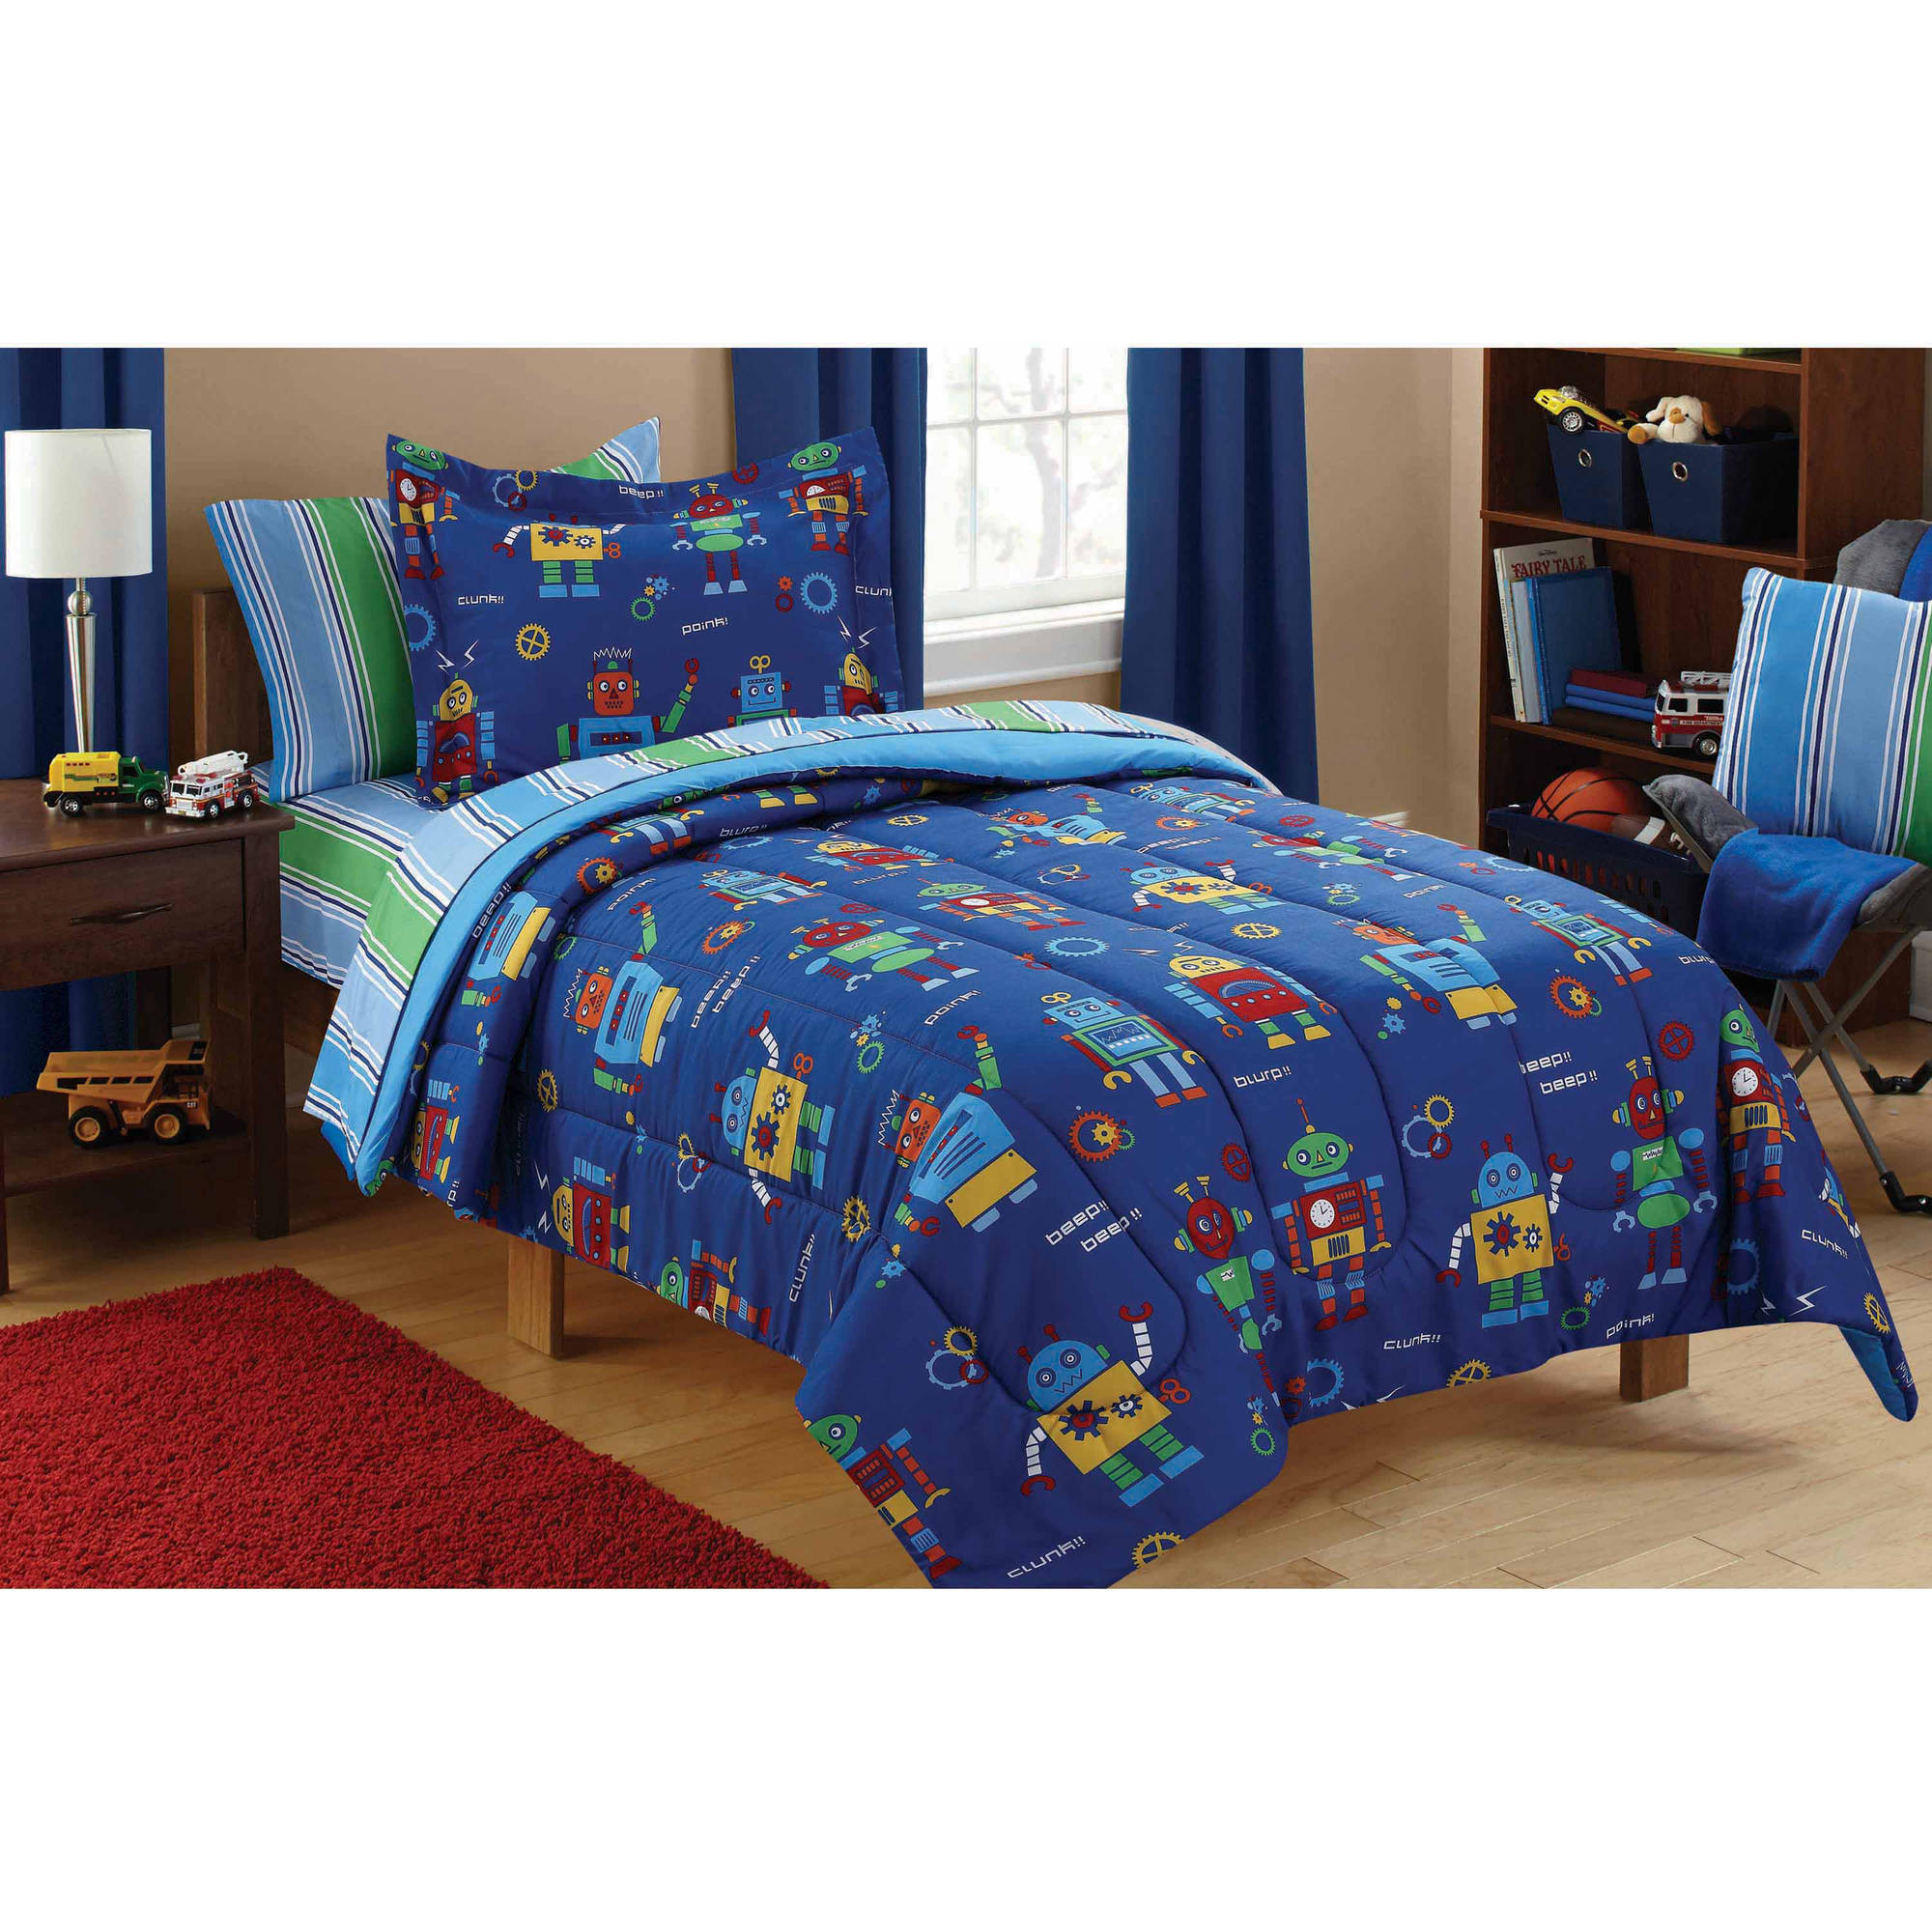 Kids Bedroom Sets Walmart
 Mainstays Kids Robots Bed in a Bag Coordinating Bedding